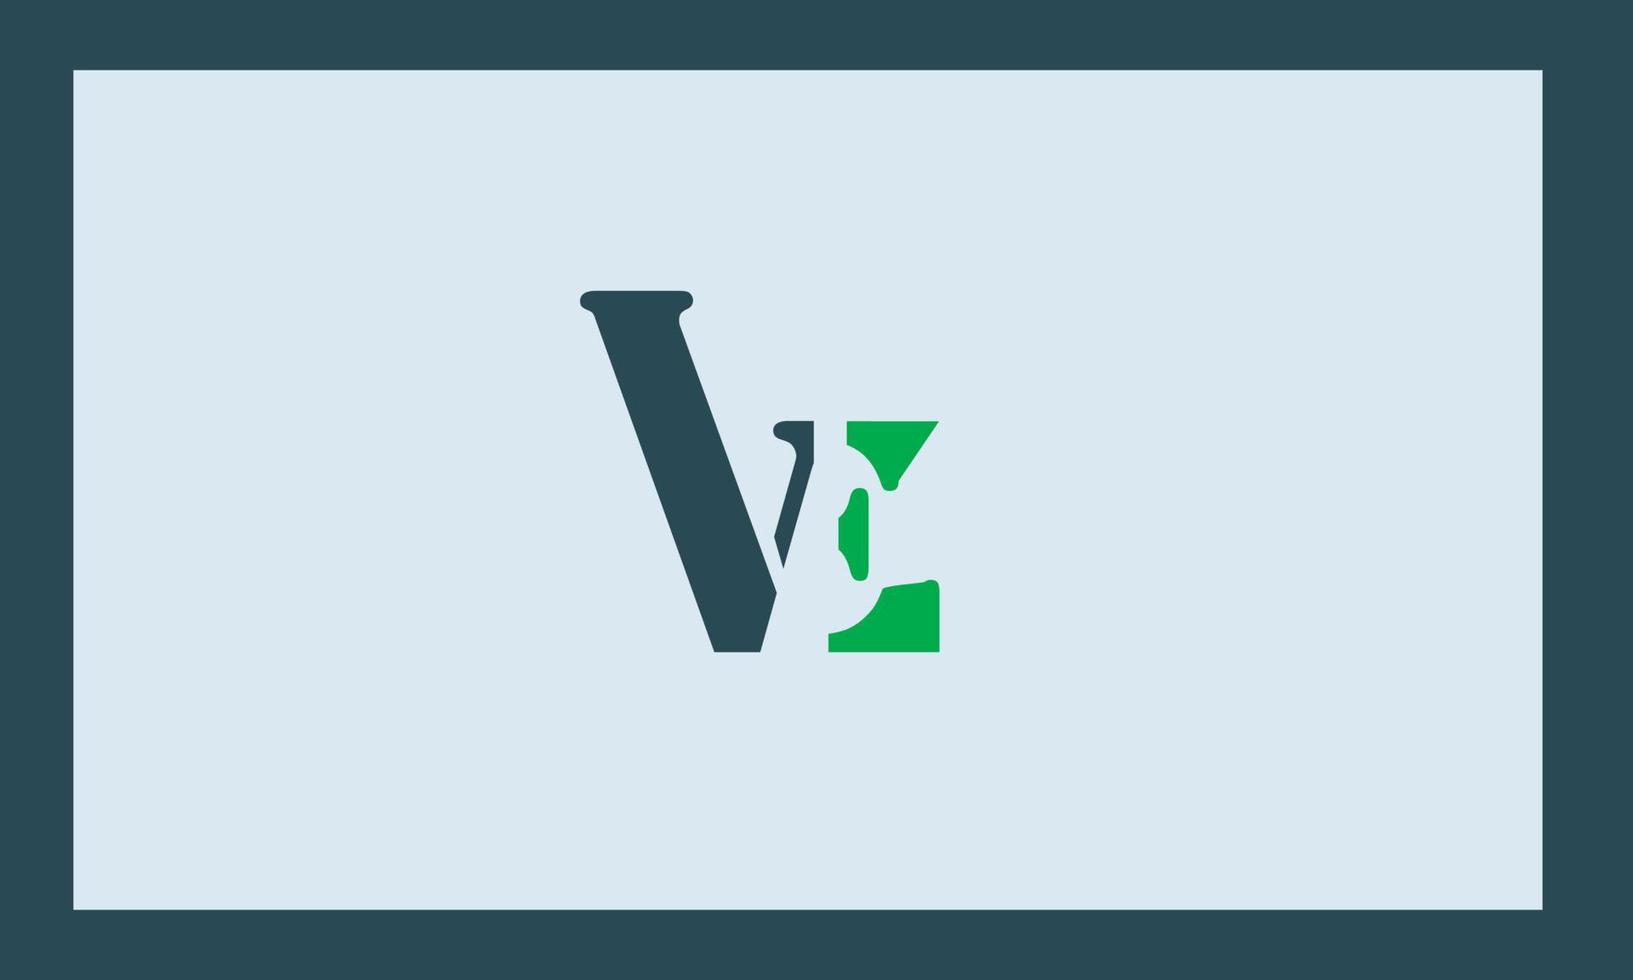 alfabet letters initialen monogram logo ve, ev, v en e vector